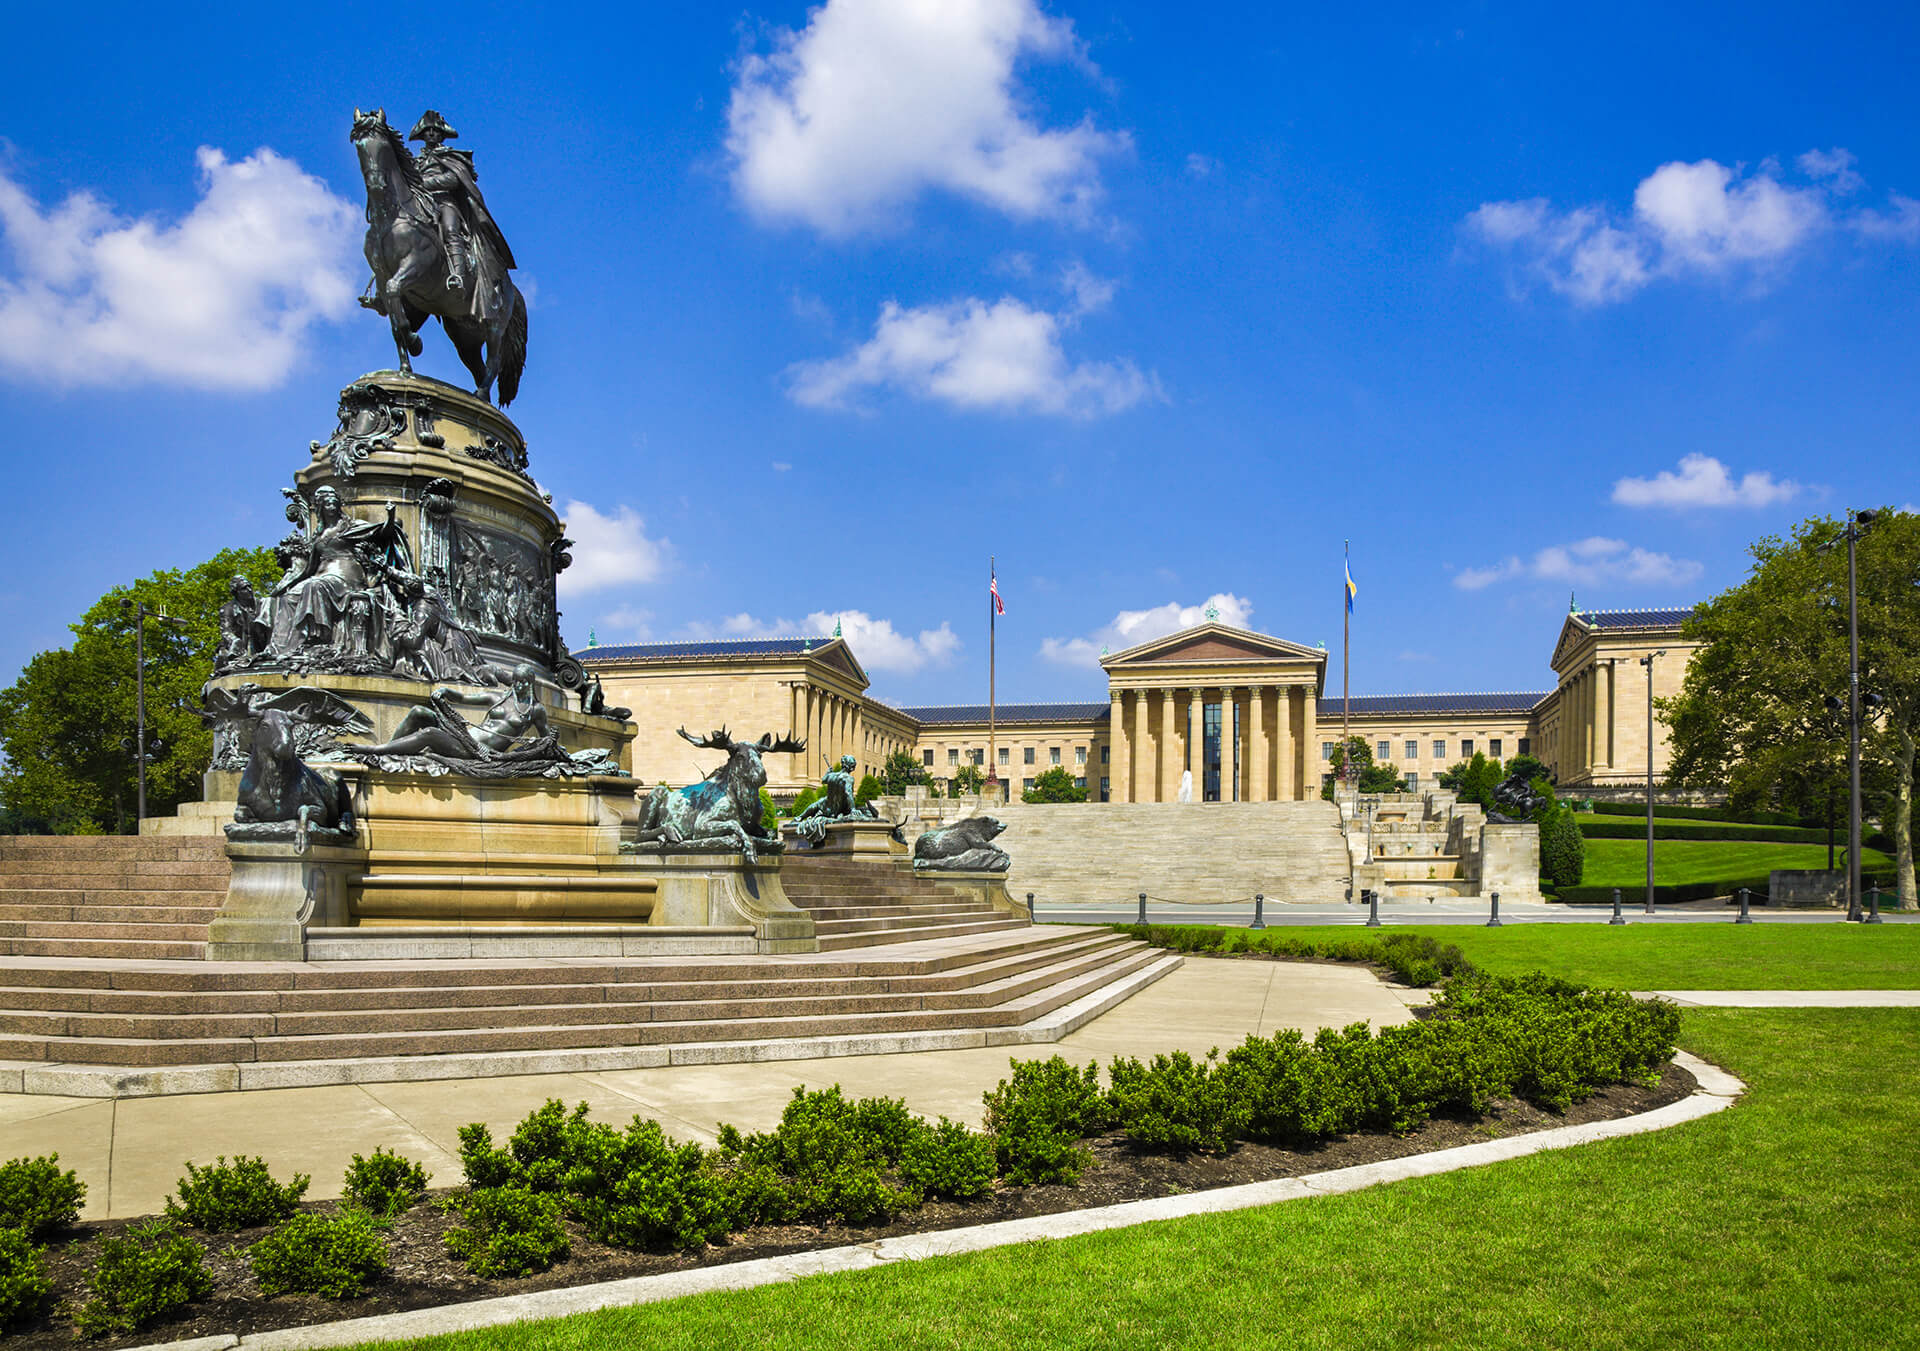 George Washington Monument in front of Philadelphia Museum of Art